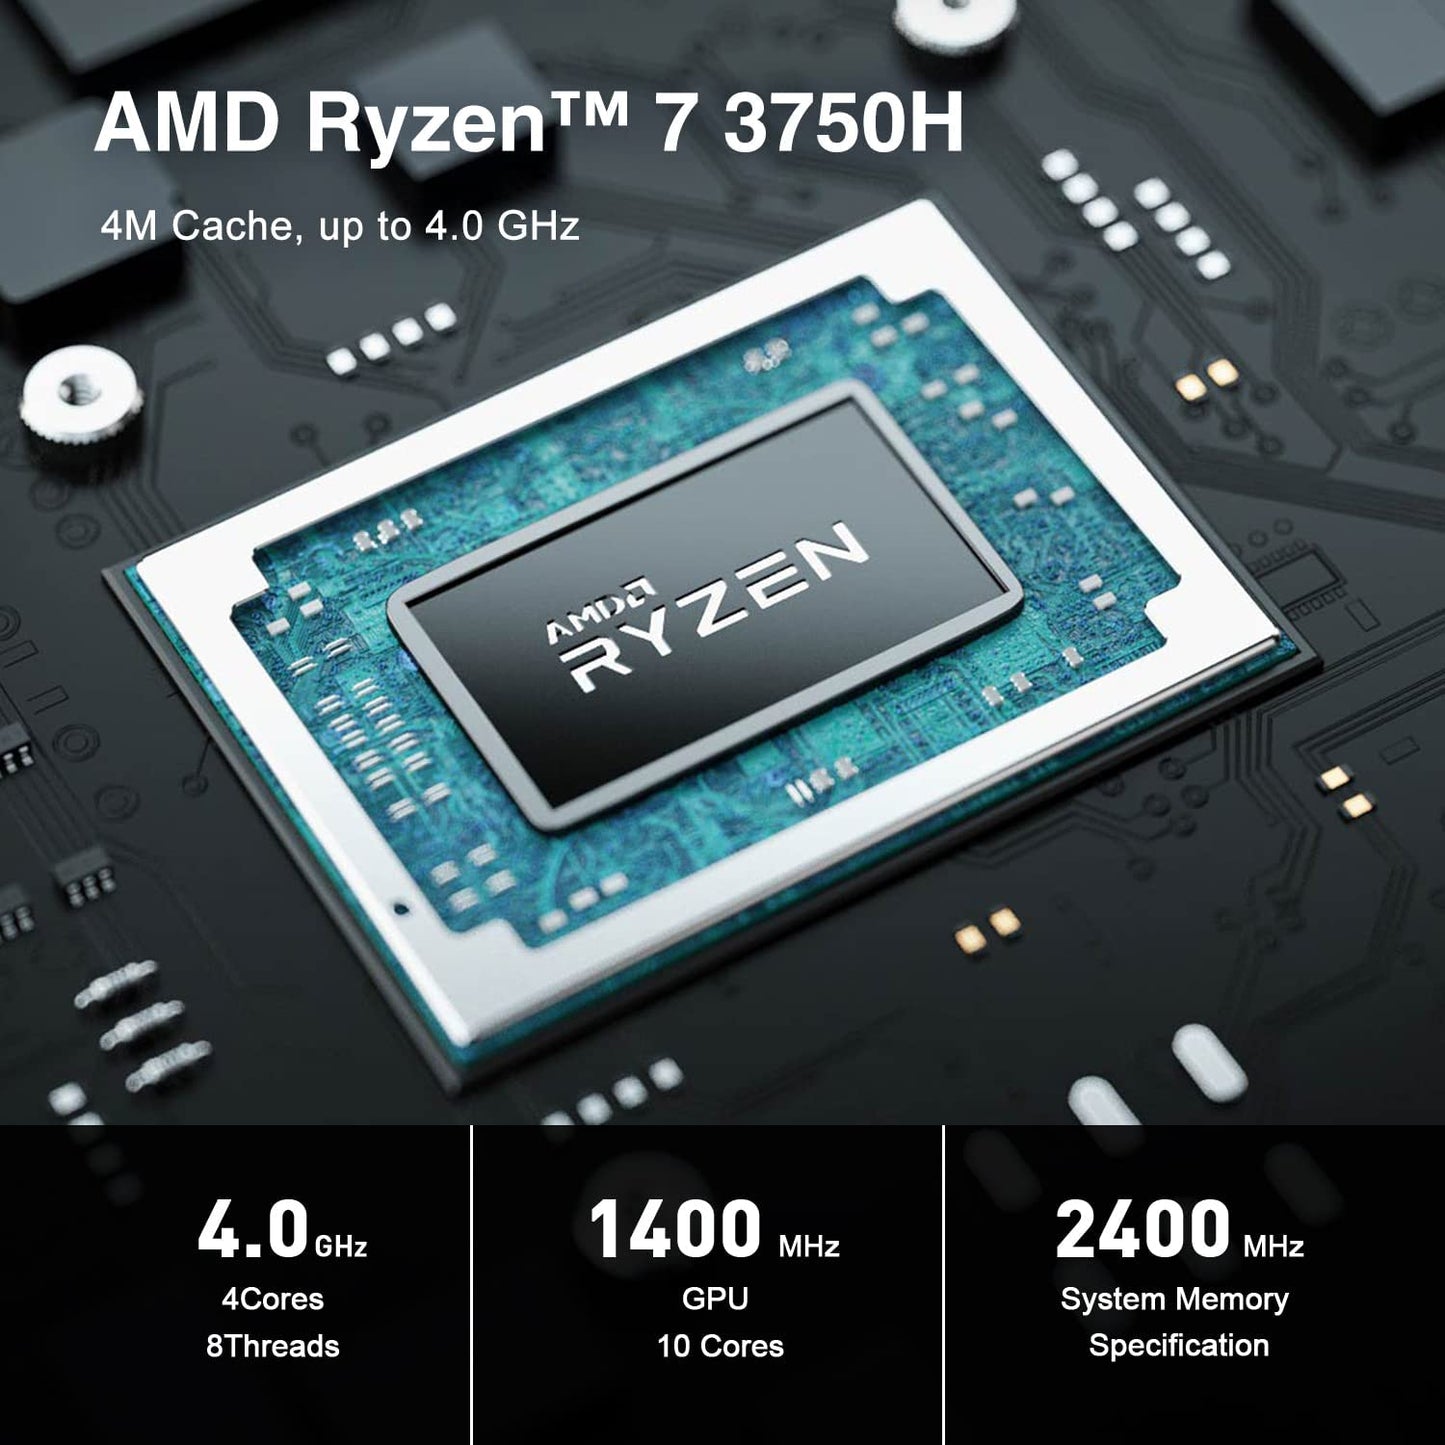 Desktop PC AMD Ryzen 7 3750H 4C/8T 8G DDR4 256G M.2 NVME SSD TRIGKEY S3 Mini PC Windows 10 Pro, Support Windows 11 Gaming Working Micro PC, 4K@60Hz UHD Graphics Triple Display/Dual Band WiFi/Win 11